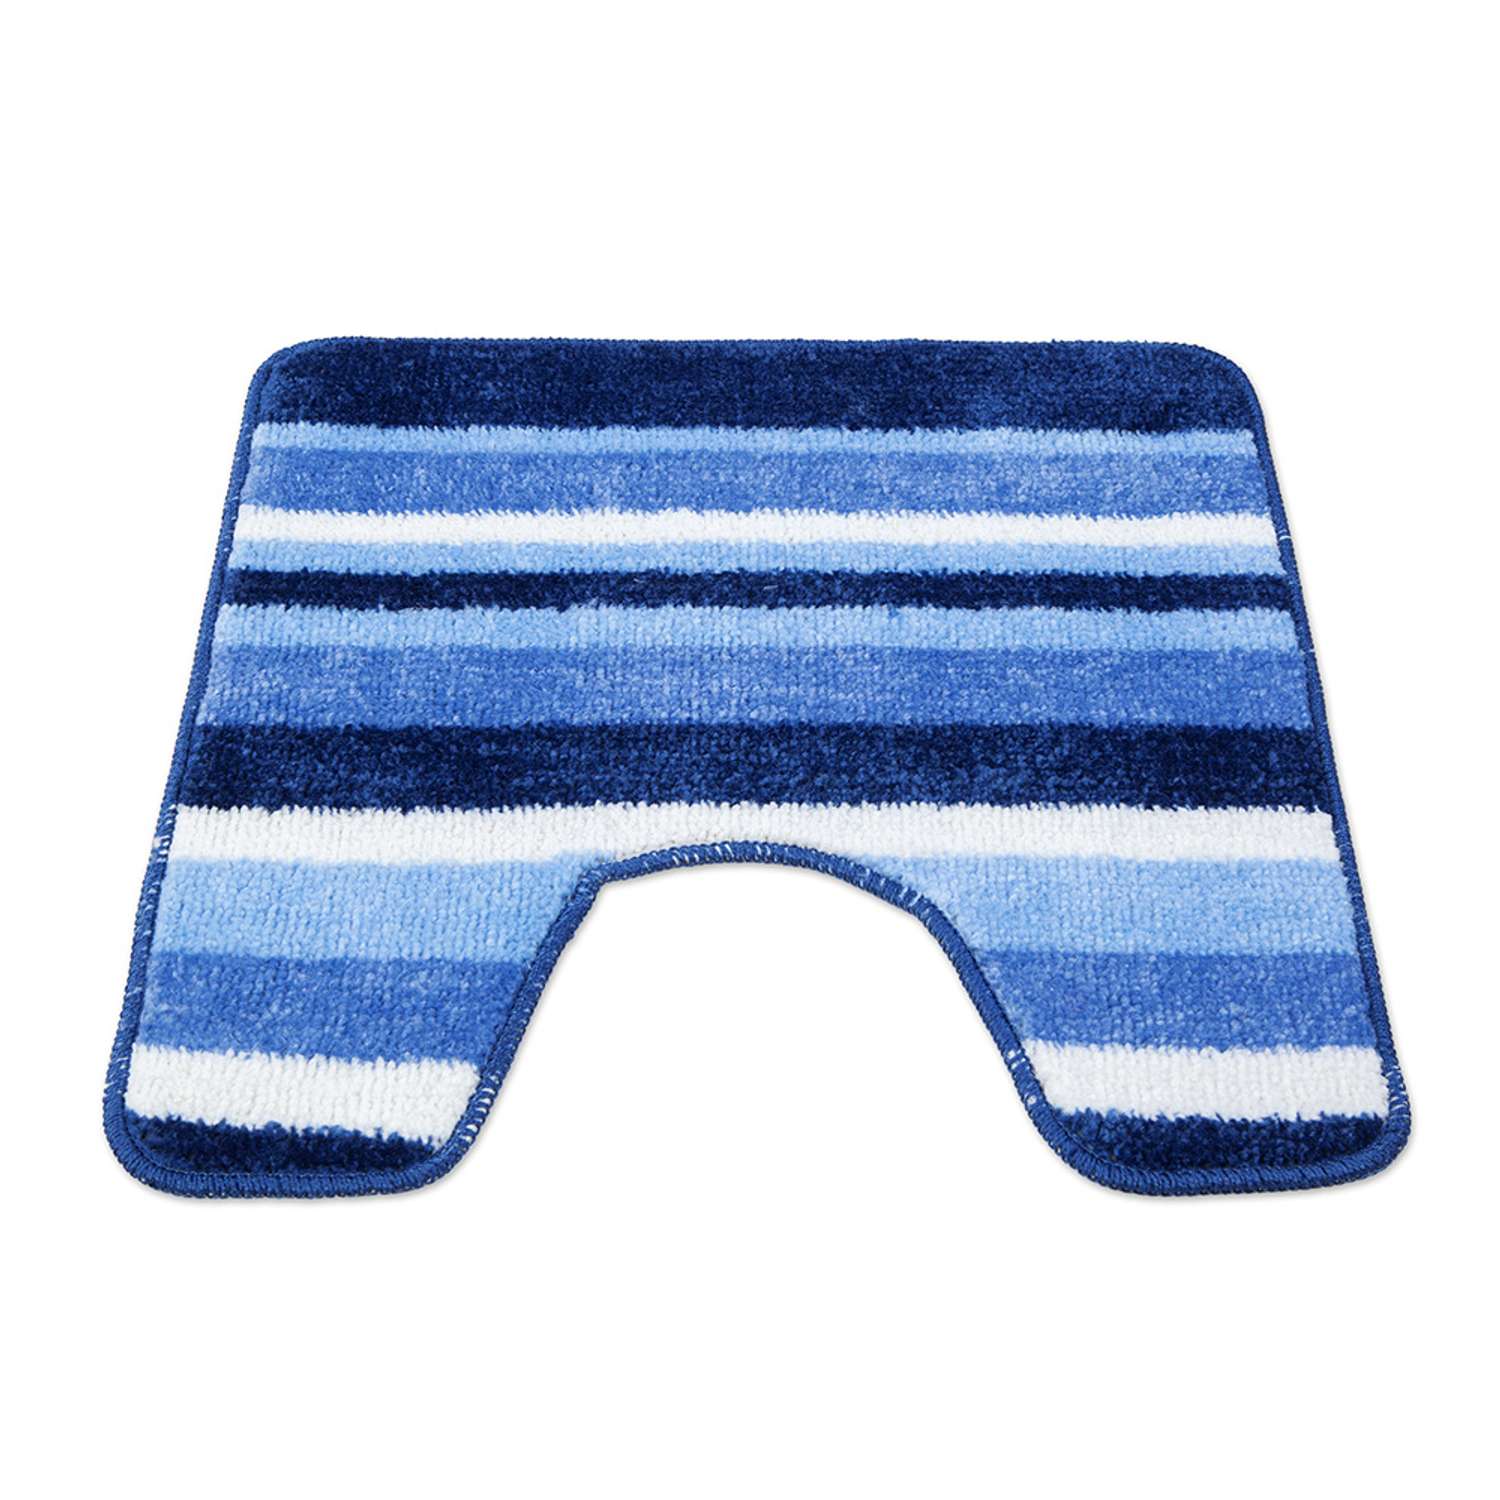 Ковер для ванной Aquarius Blue 50х50см - фото 2